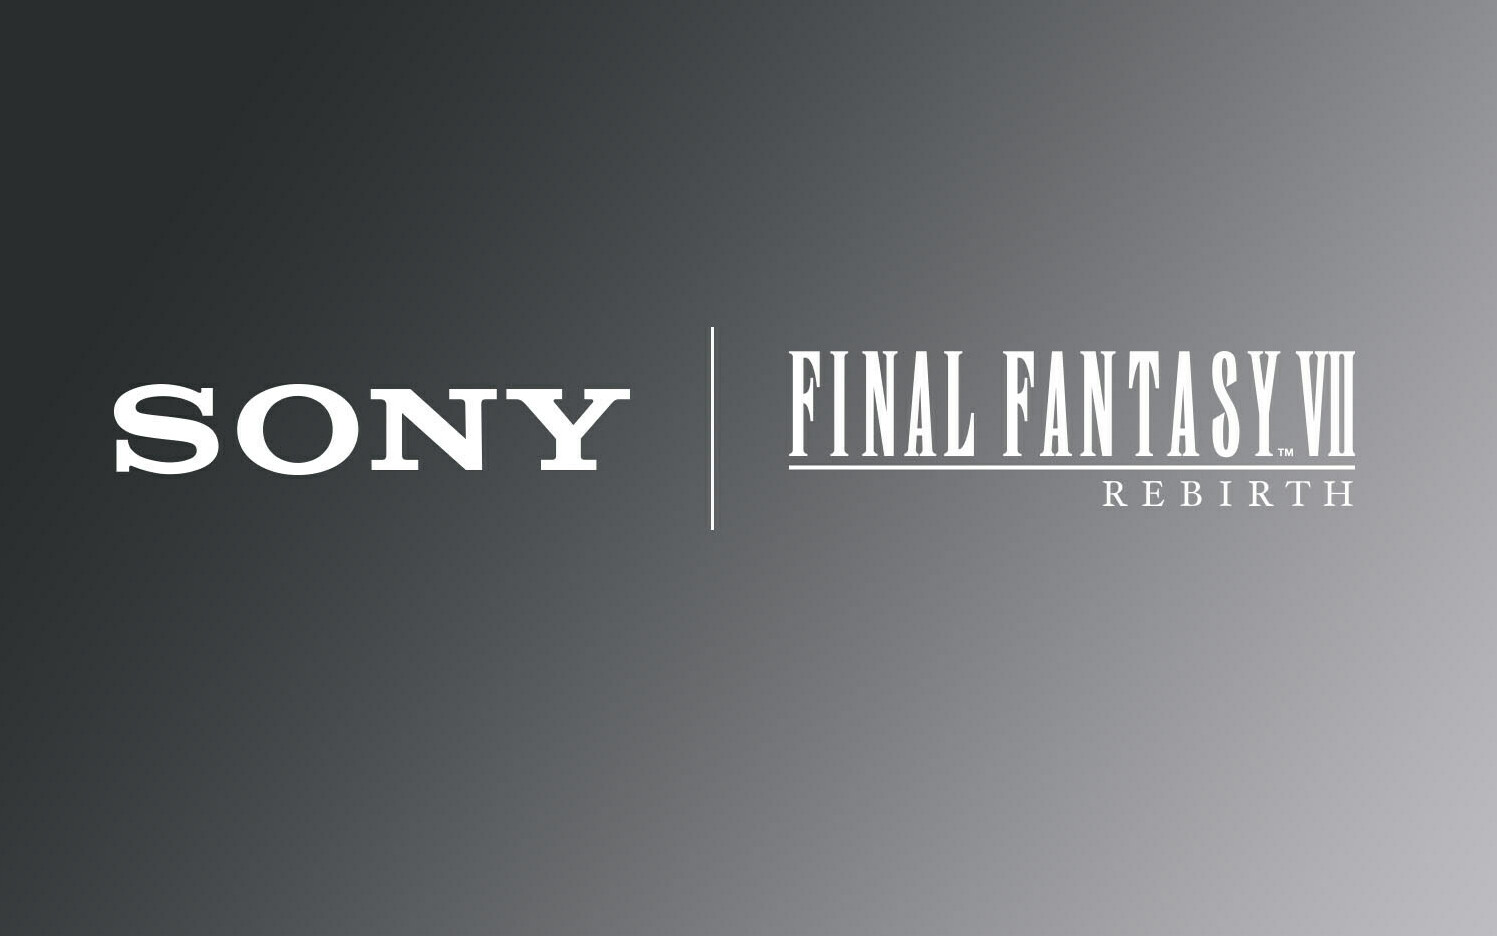 Sony x Final Fantasy VII Rebirth